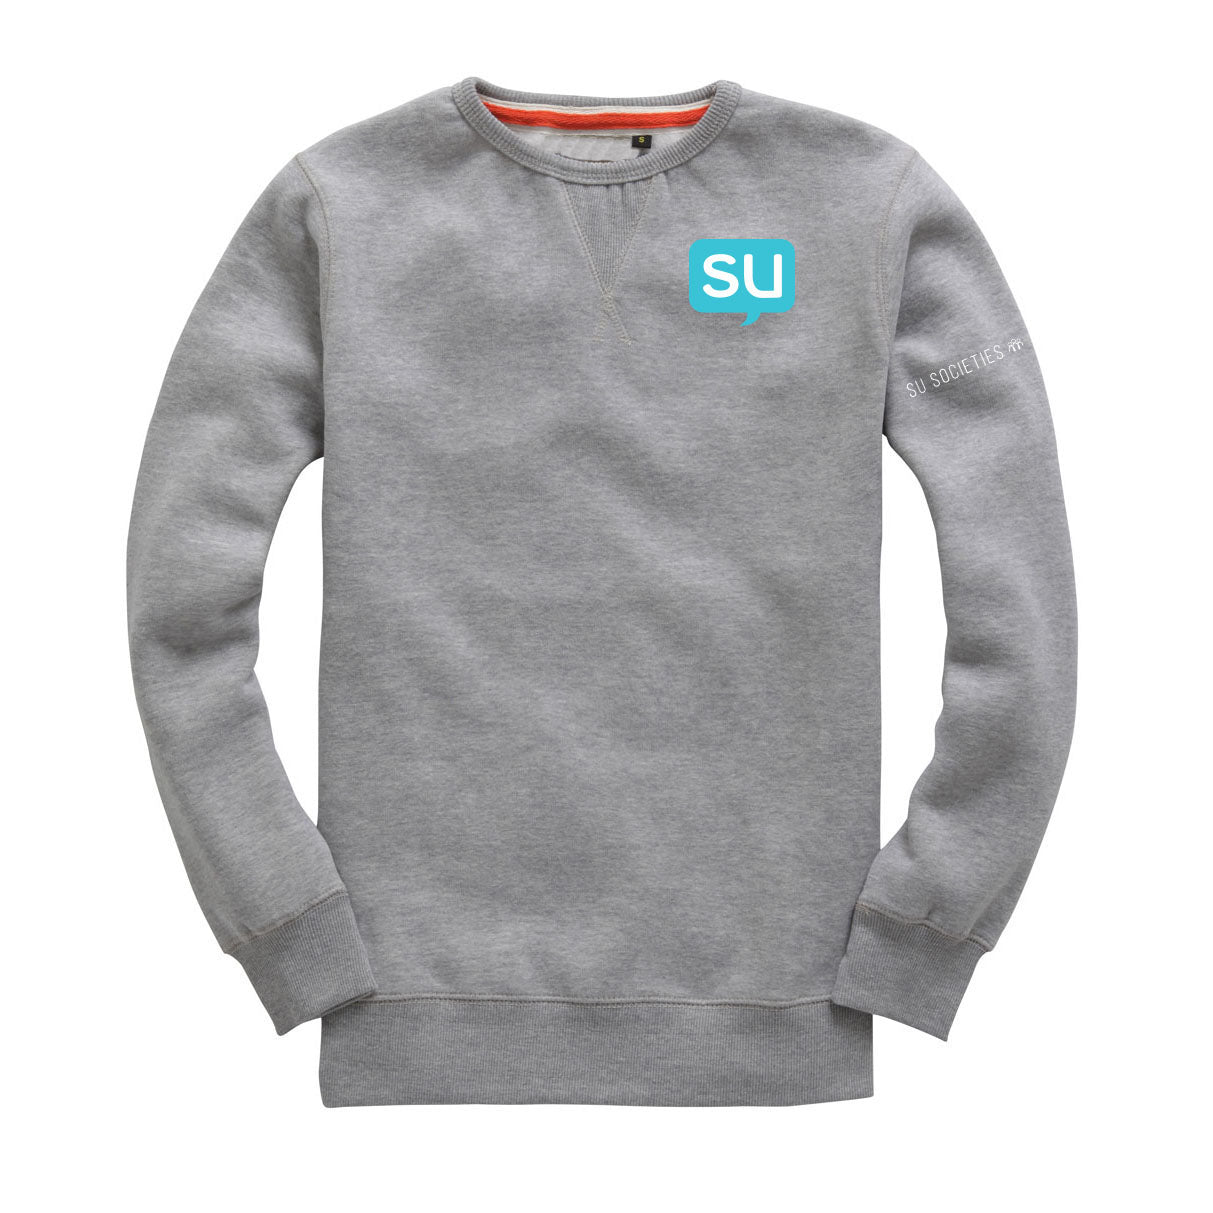 Ultra Premium Sweatshirt